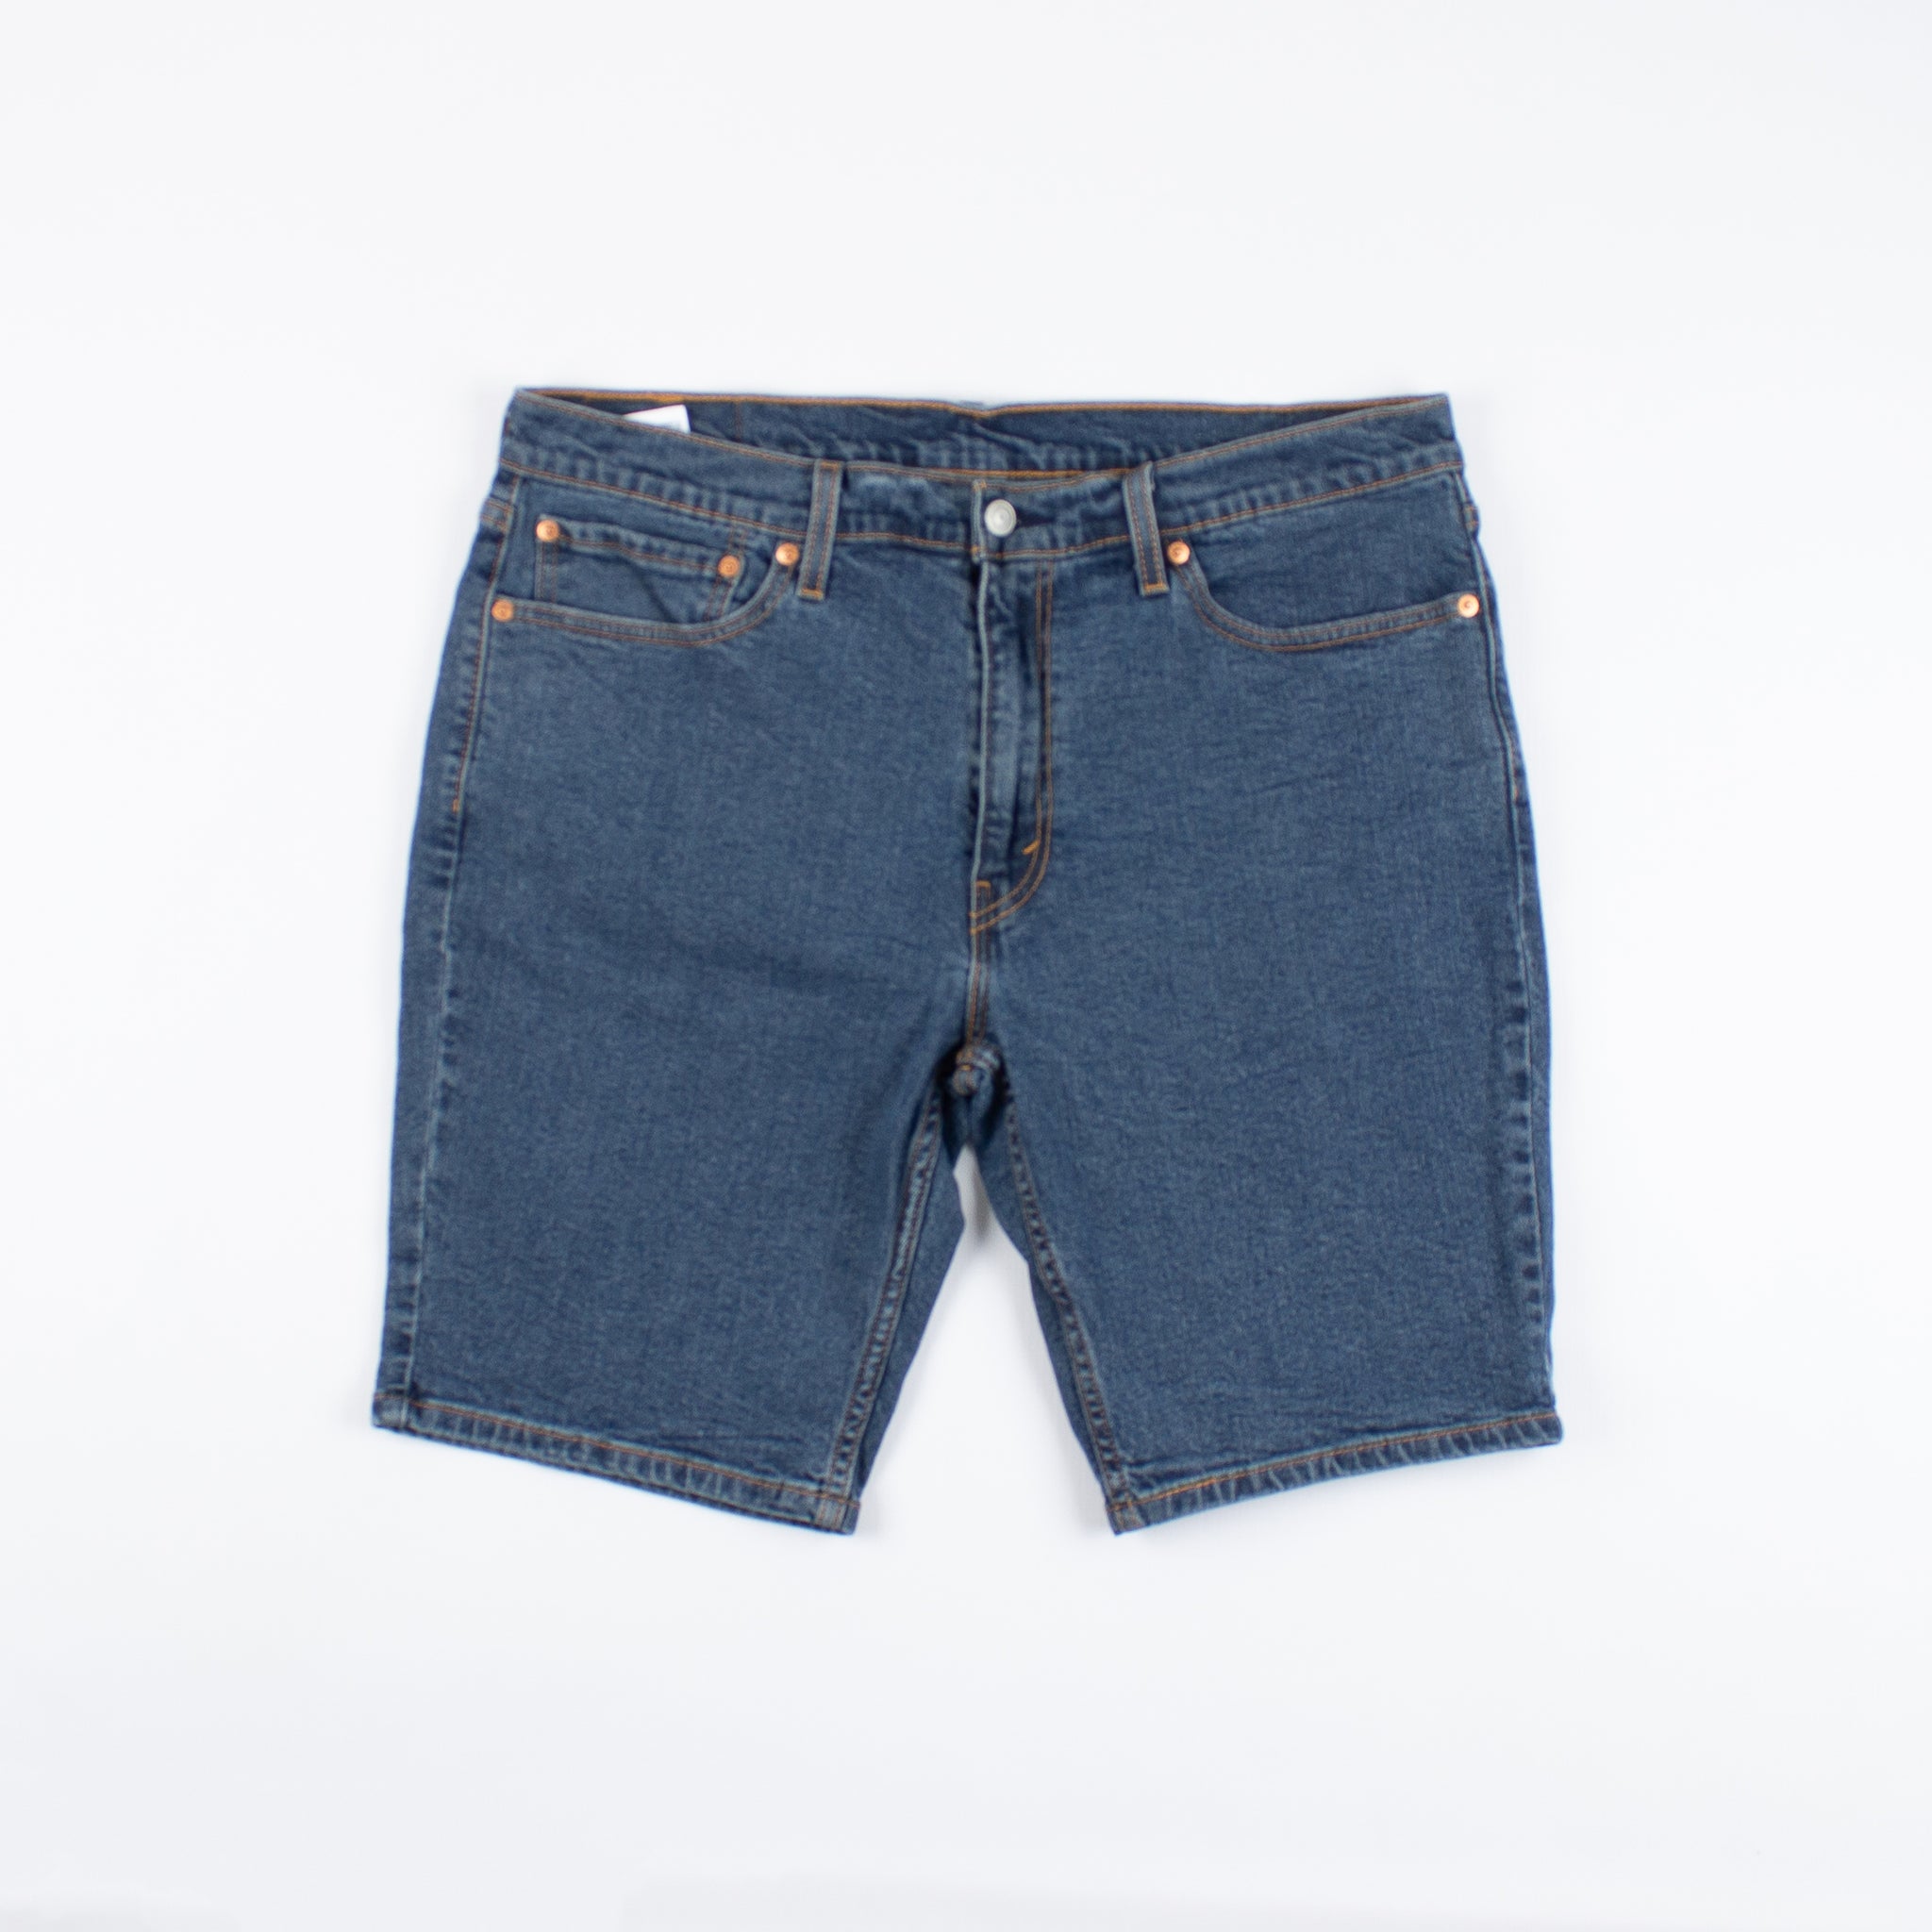 Shorts Jorts Jeans Levi's 36 Vintage